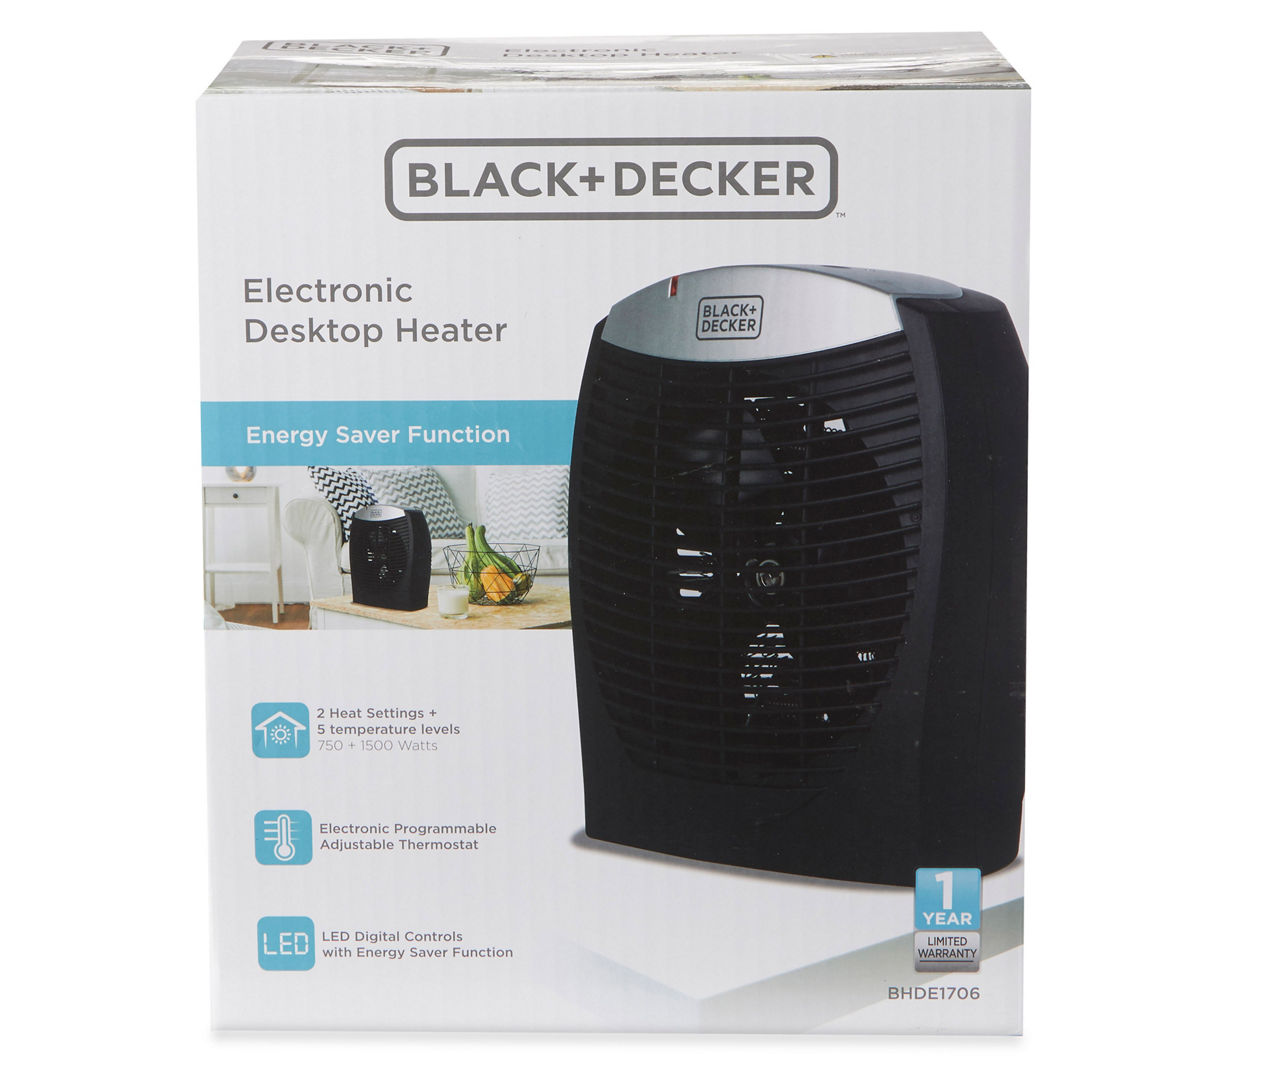 Black + Decker Black Personal Desktop Heater